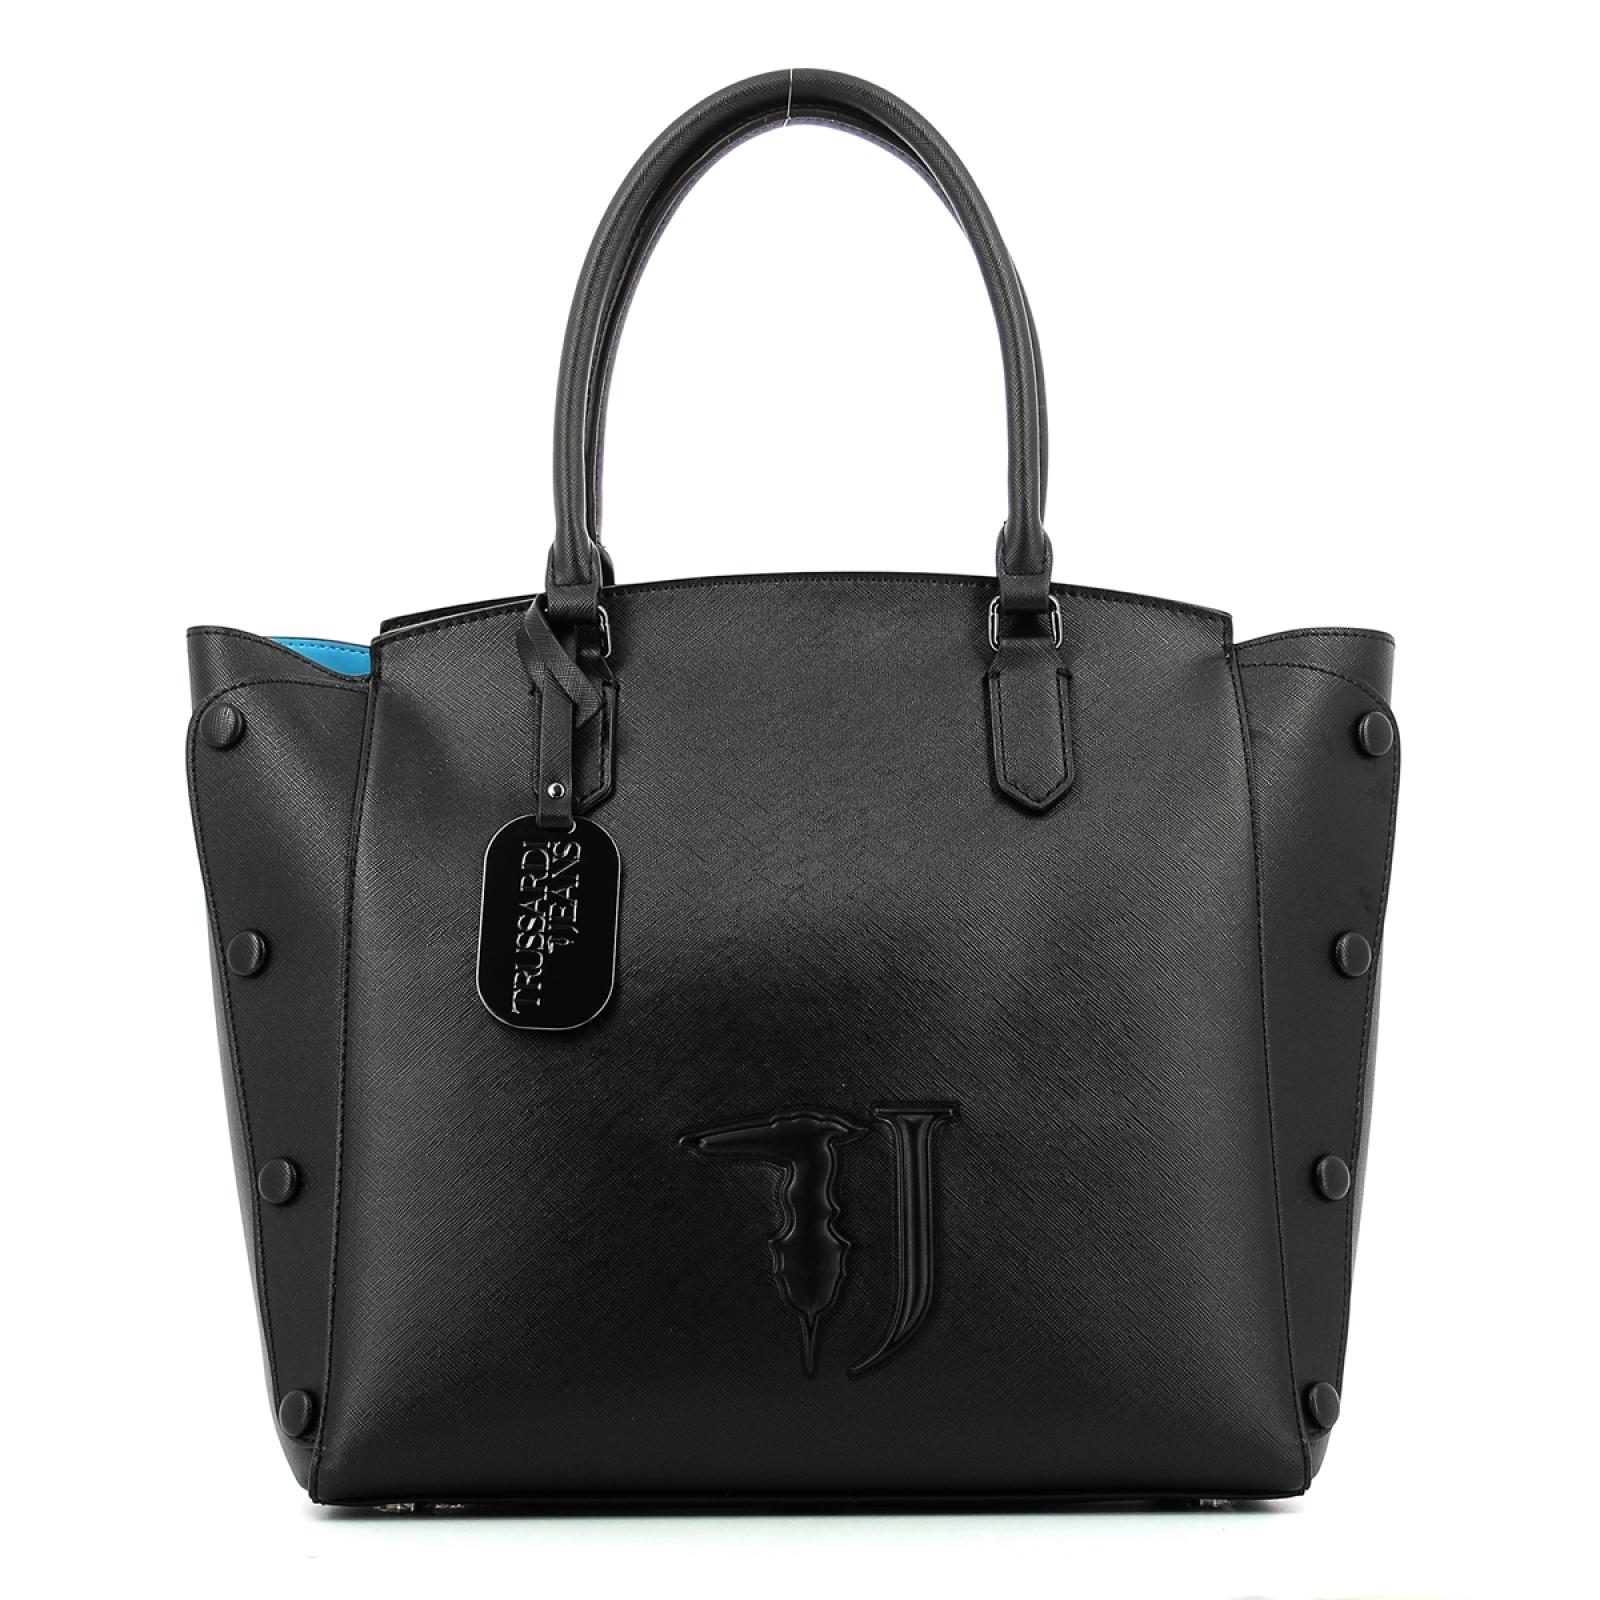 Shopping Bag Melissa-BLACK/ON/T.-UN